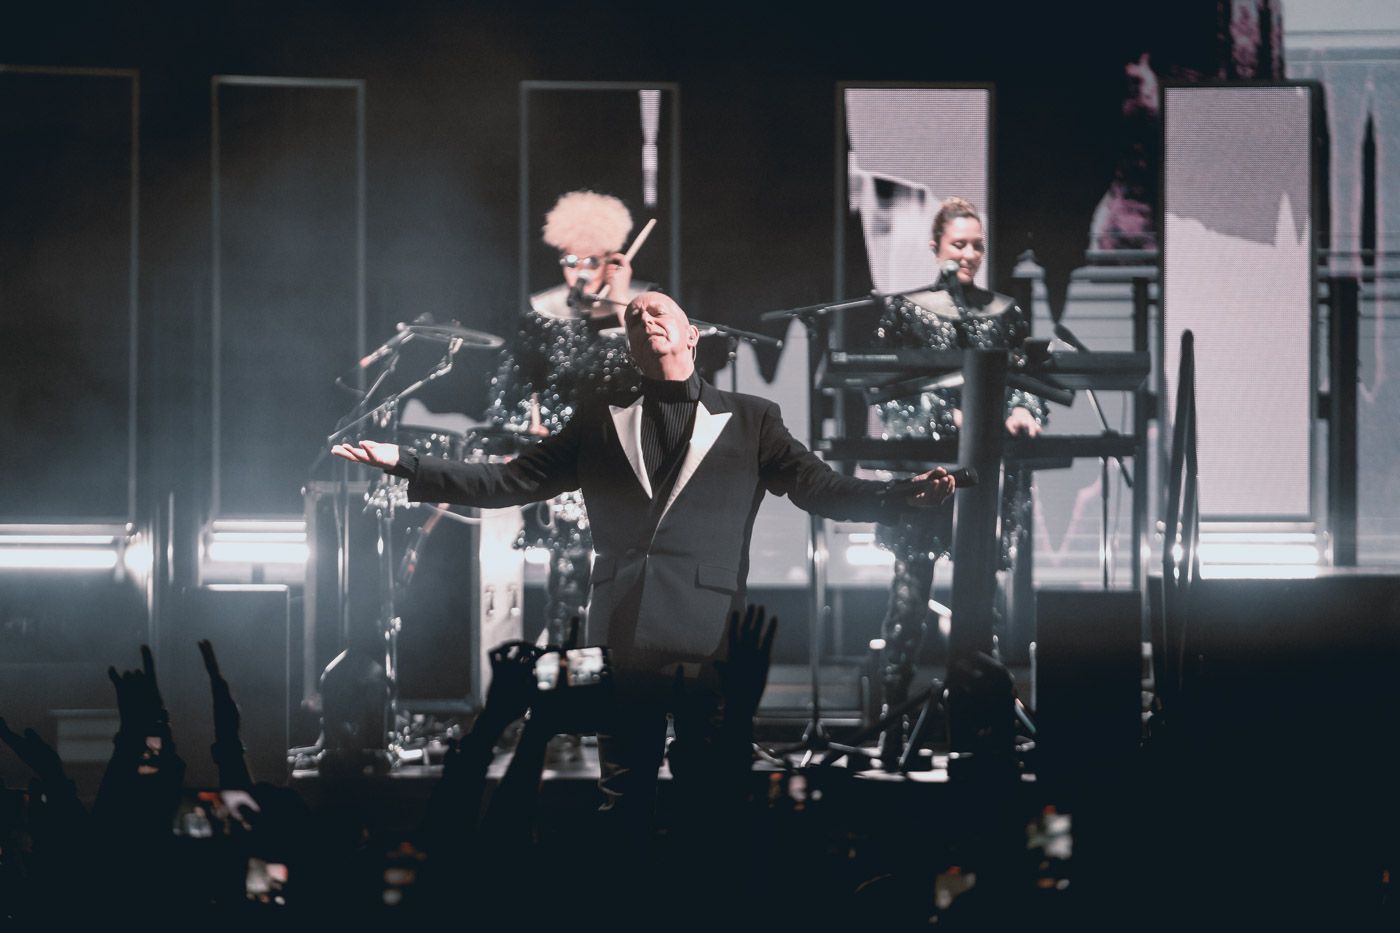 Pet Shop Boys @ Roma Summer Fest (Cavea Auditorium Parco della Musica) Marta Bandino per www.vezmagazine.it